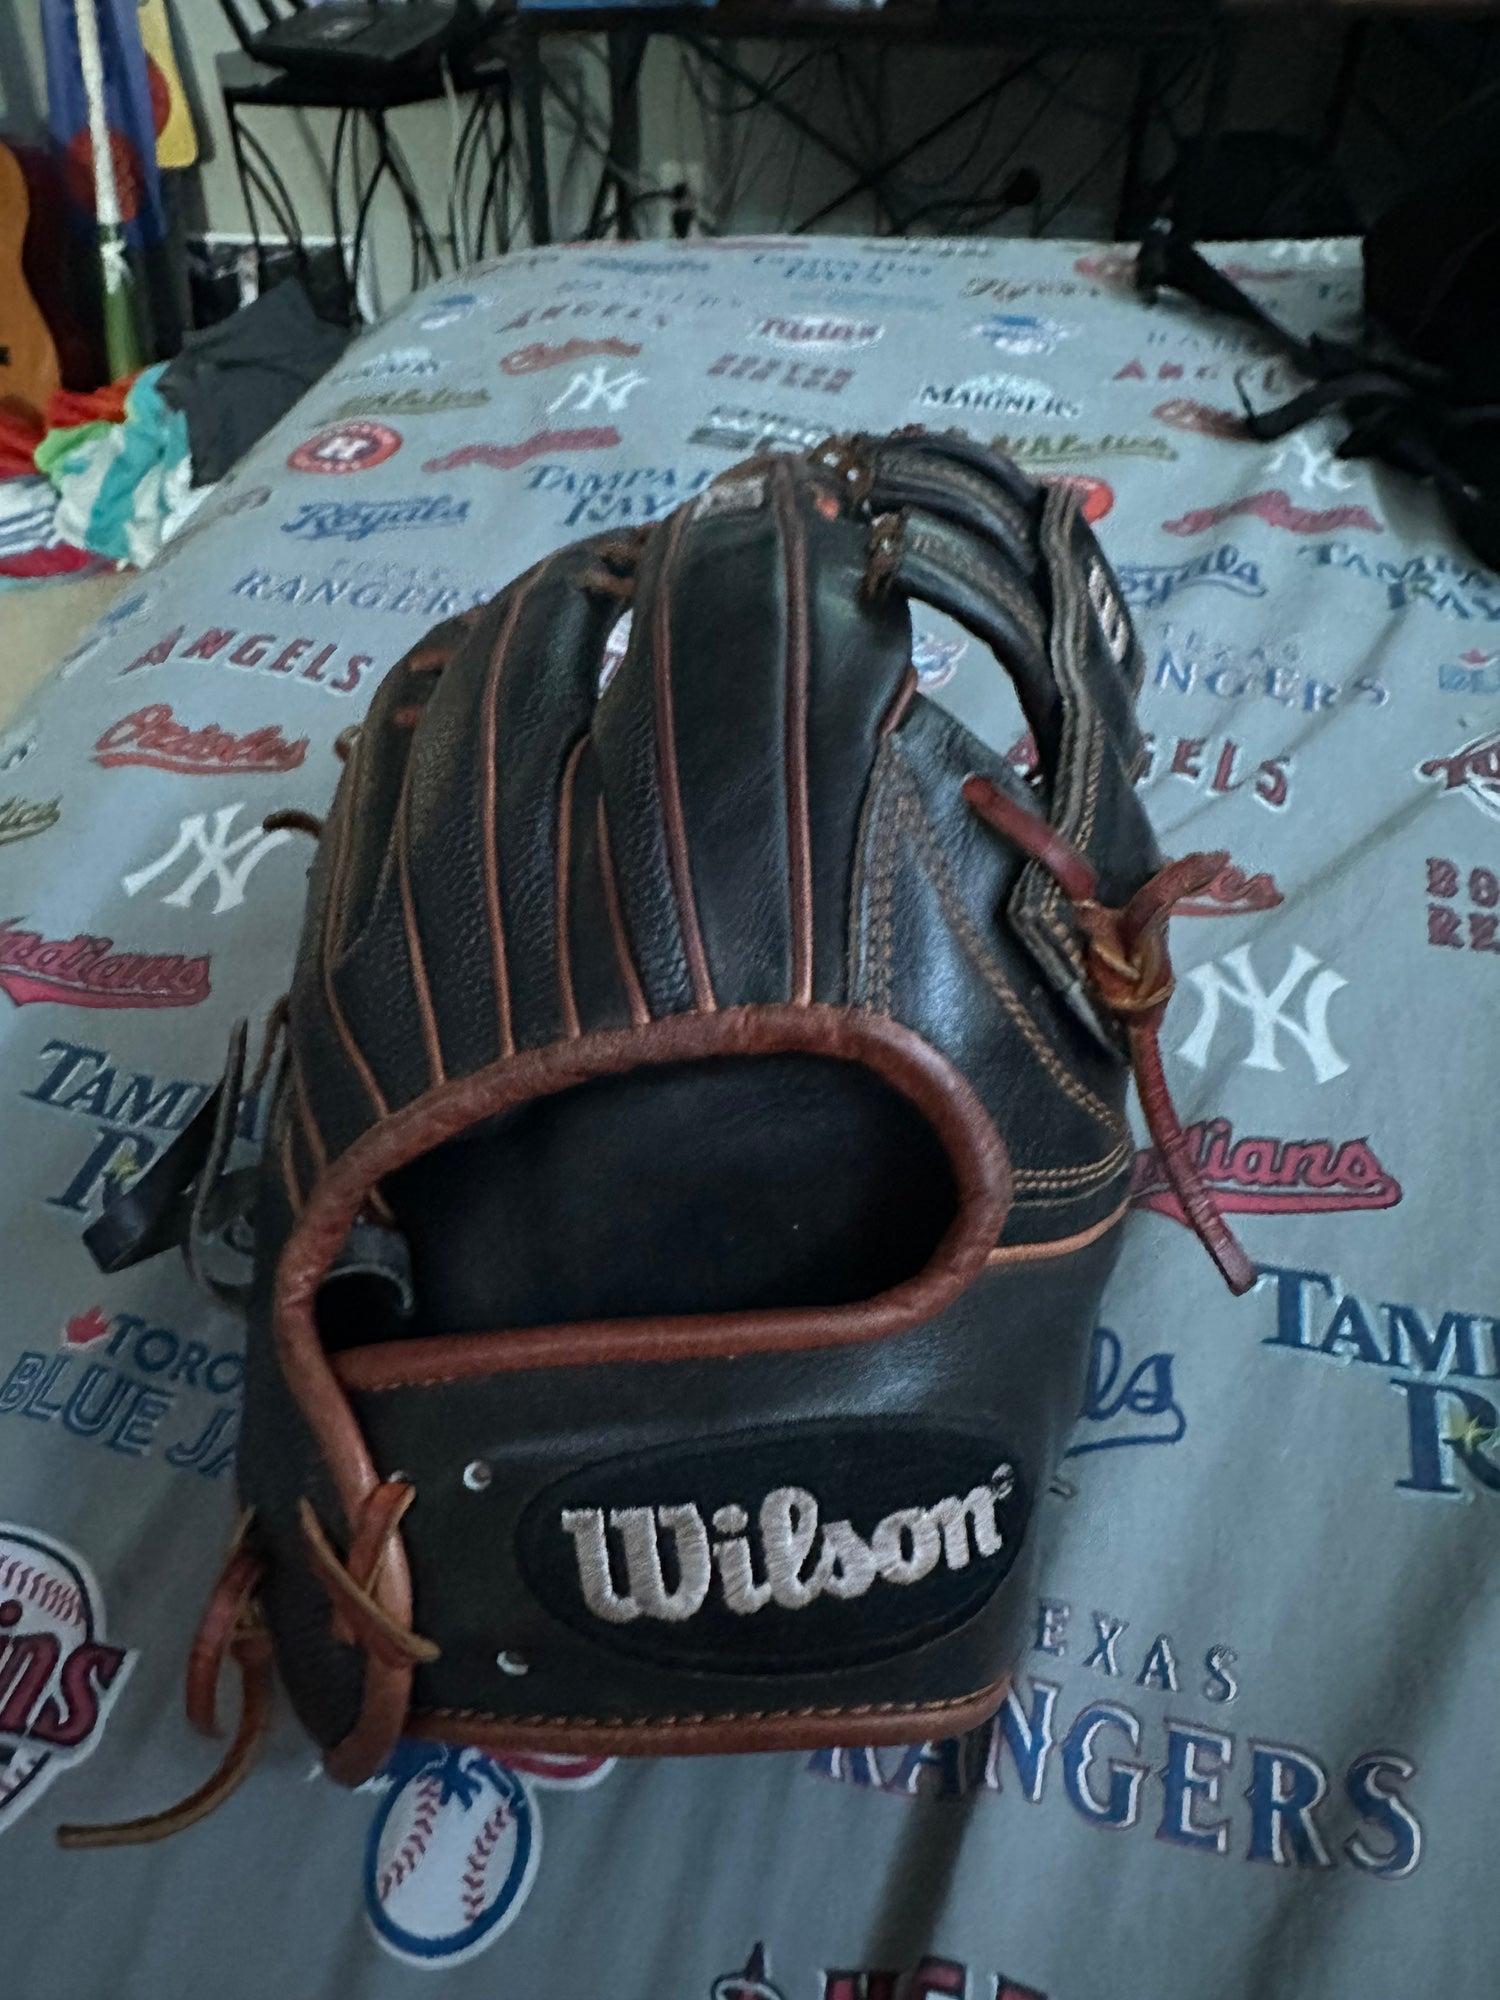 2021 Outfield 12.75 A2K Baseball Glove